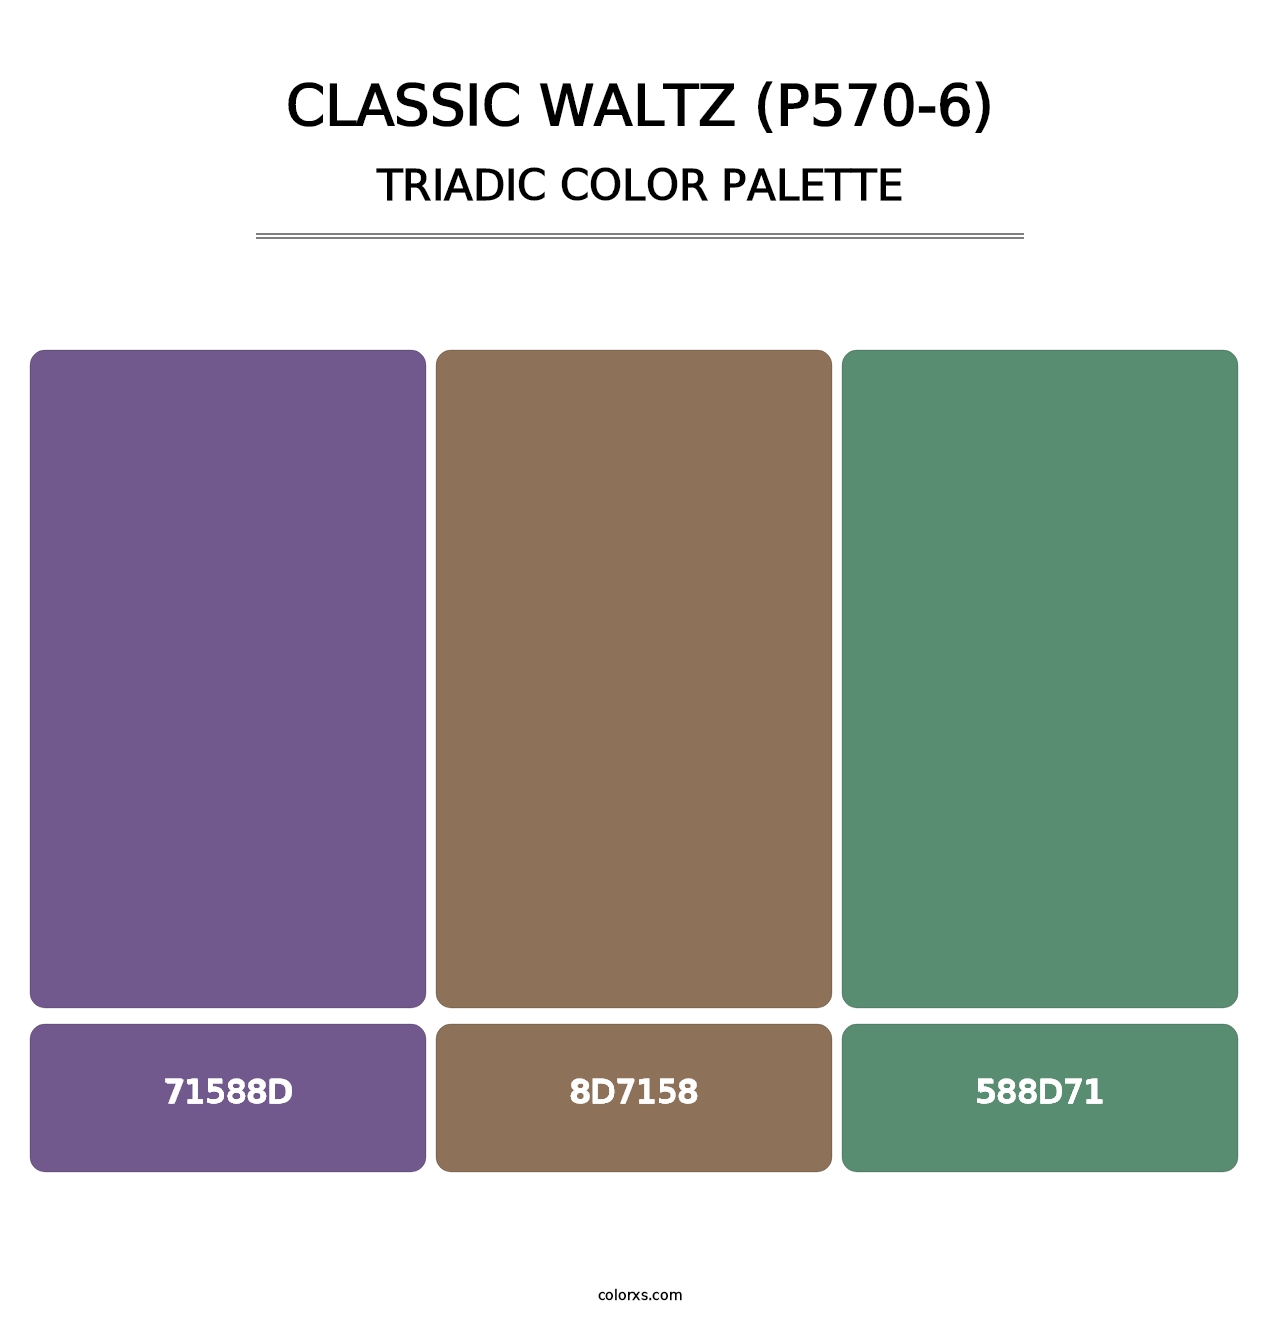 Classic Waltz (P570-6) - Triadic Color Palette